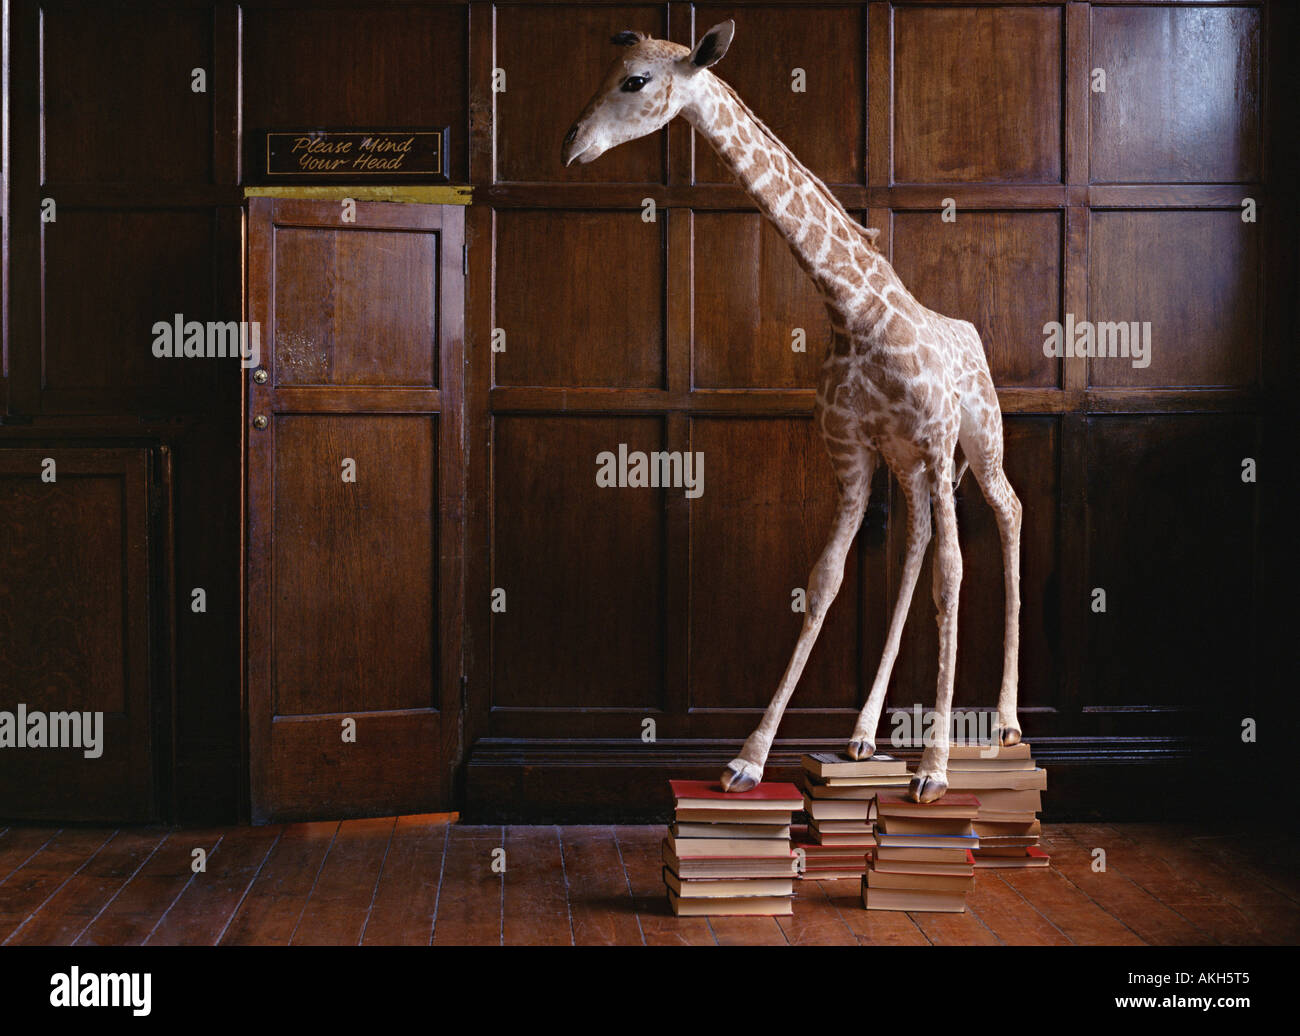 Stuffed giraffe standing on books Stock Photo